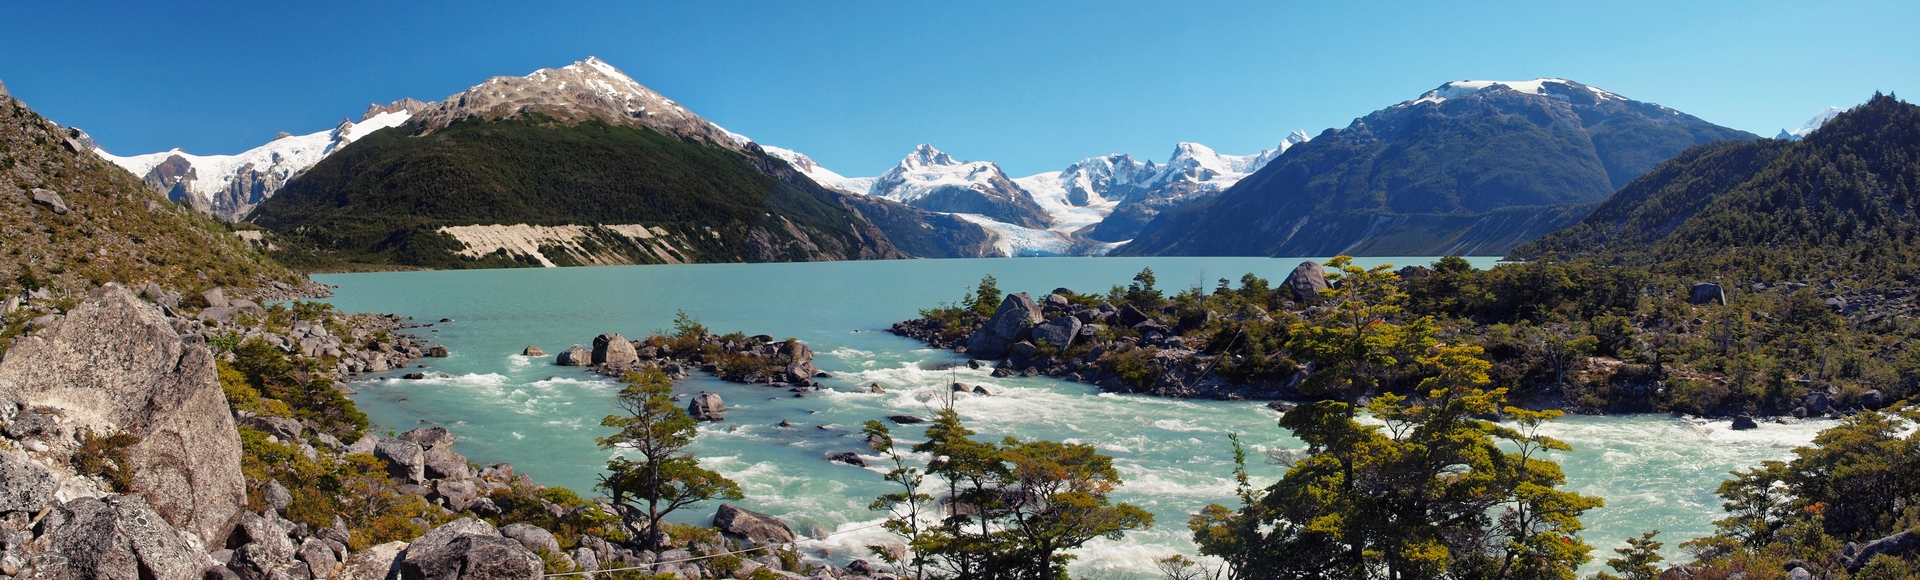 lago Leon - Patagonie - Chili